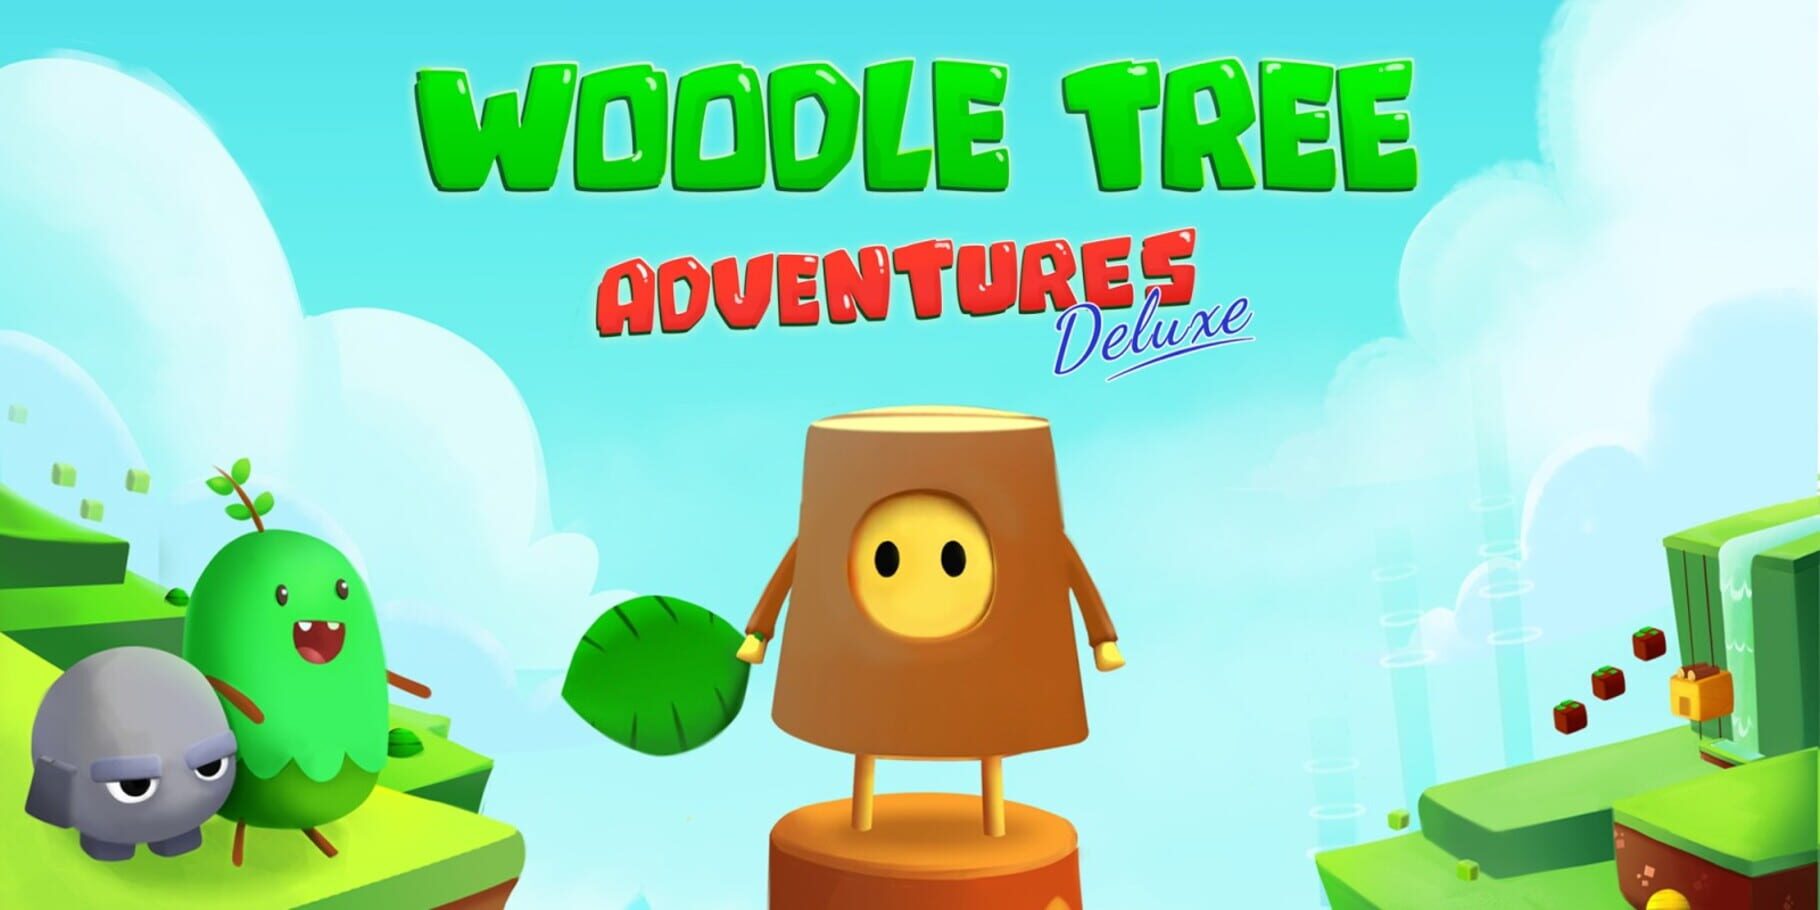 Woodle Tree Adventures artwork